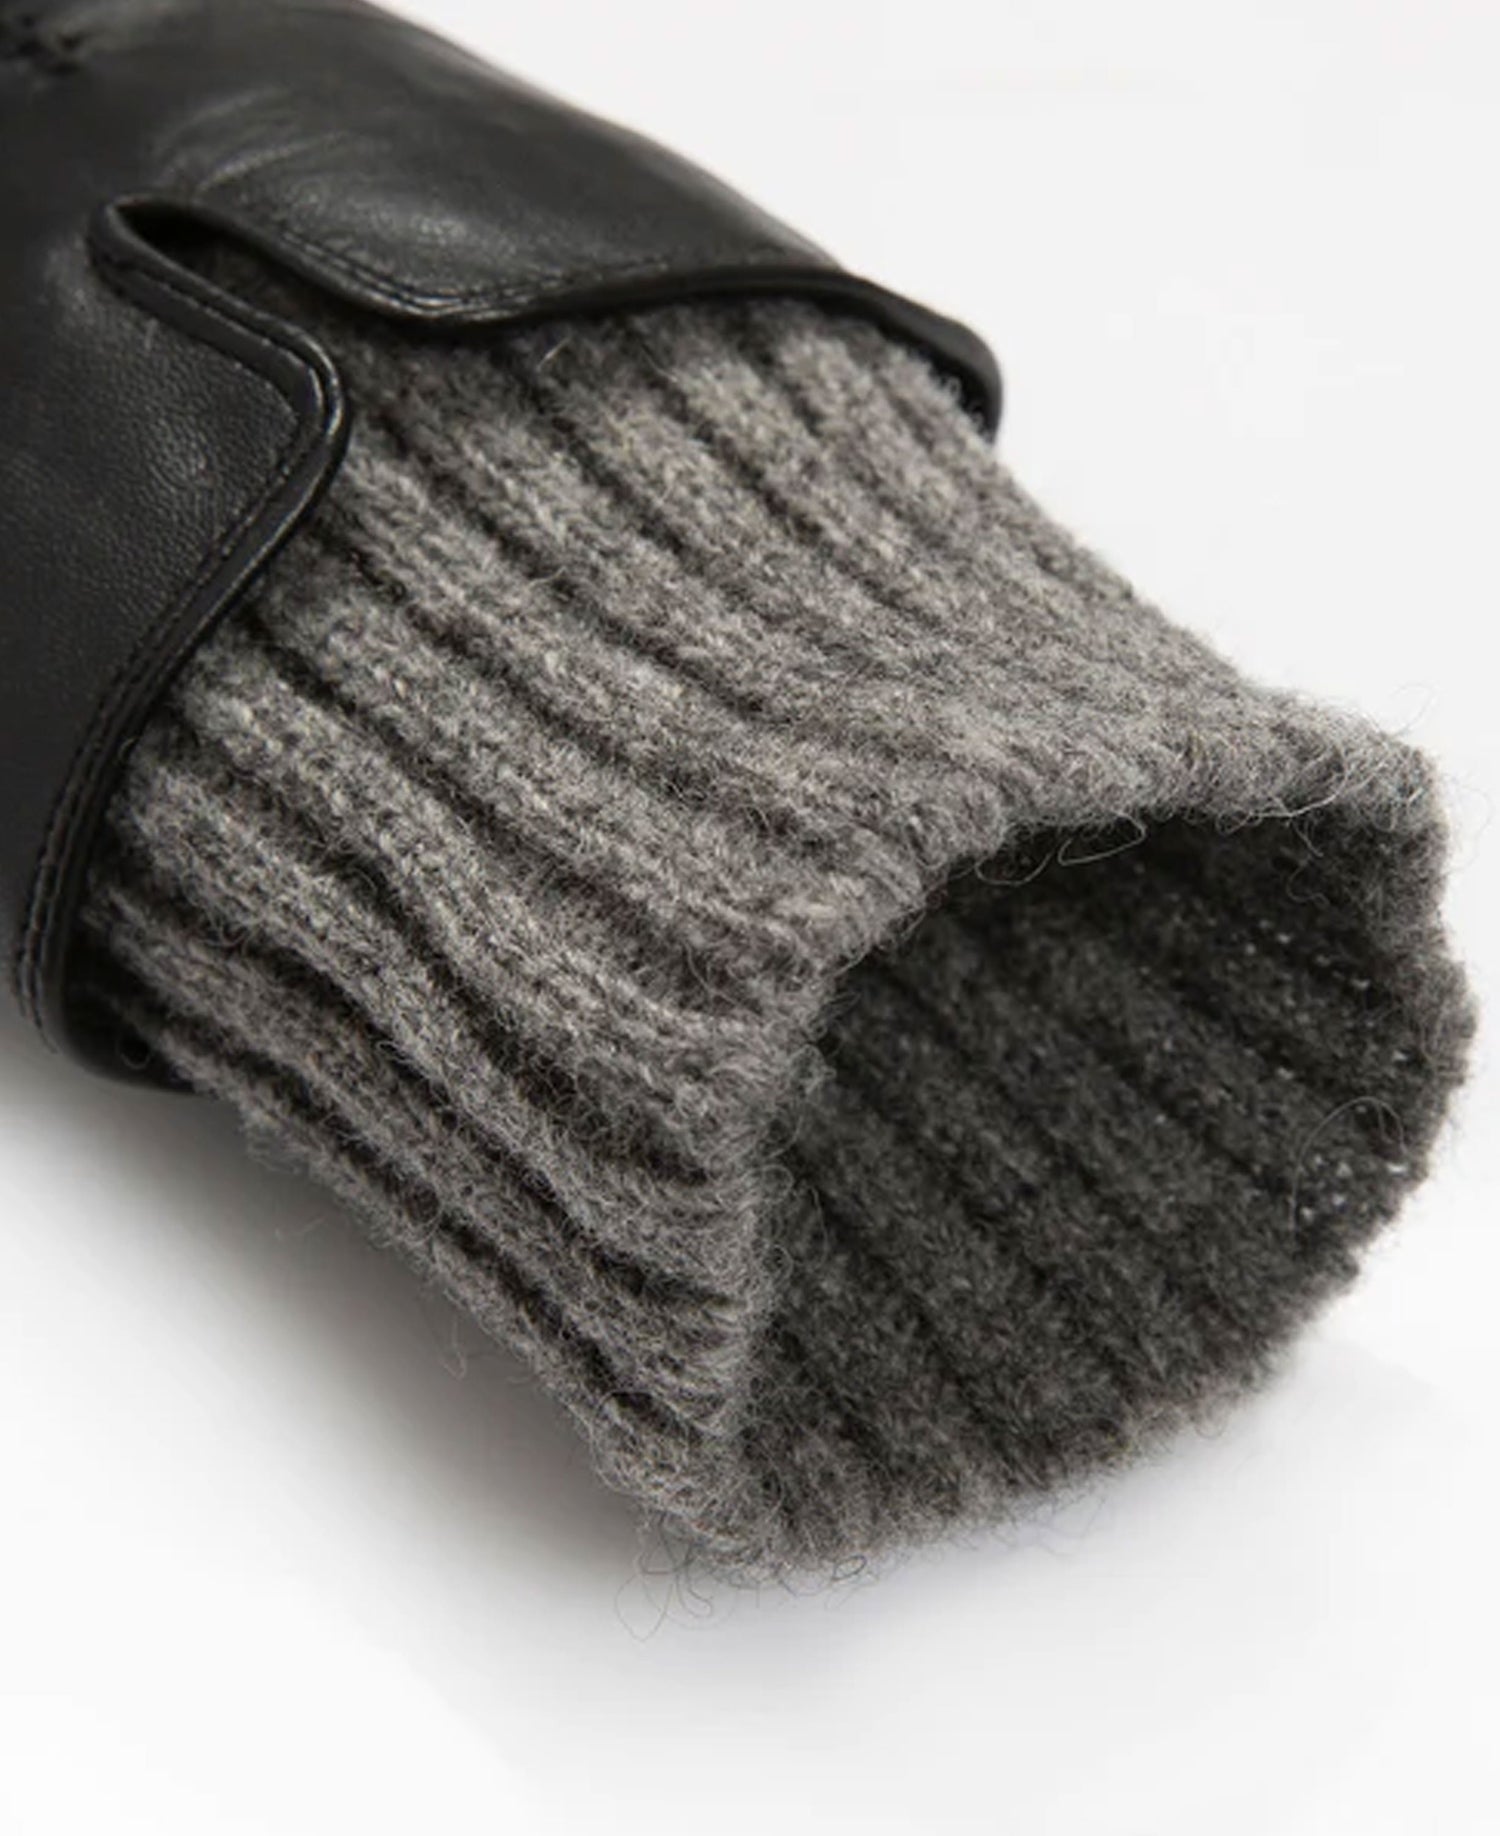 Tamara Hairsheep Gloves - Black/Charcoal